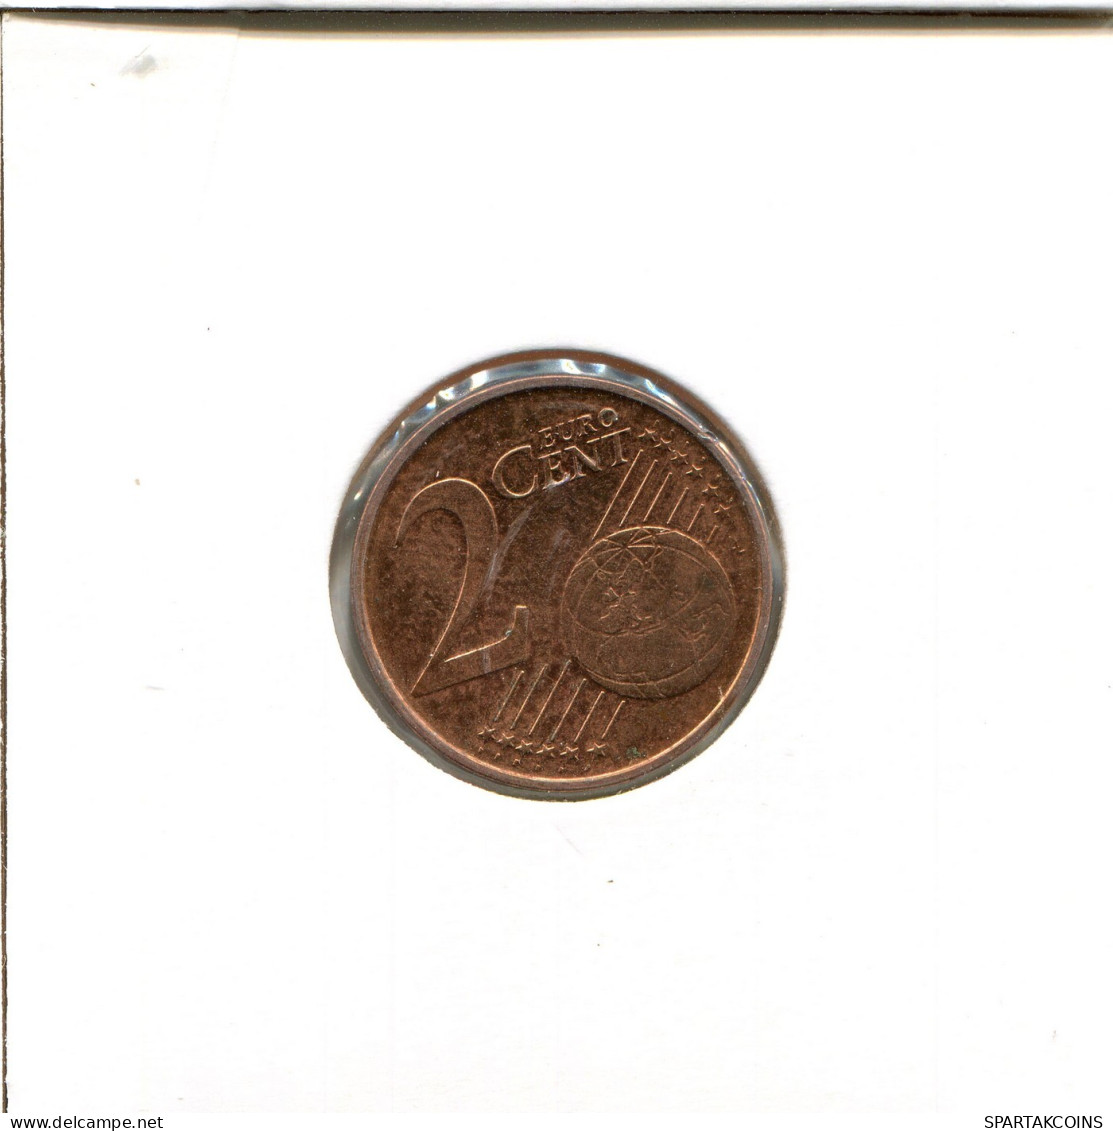 2 EURO CENTS 2005 AUSTRIA Coin #EU016.U.A - Autriche